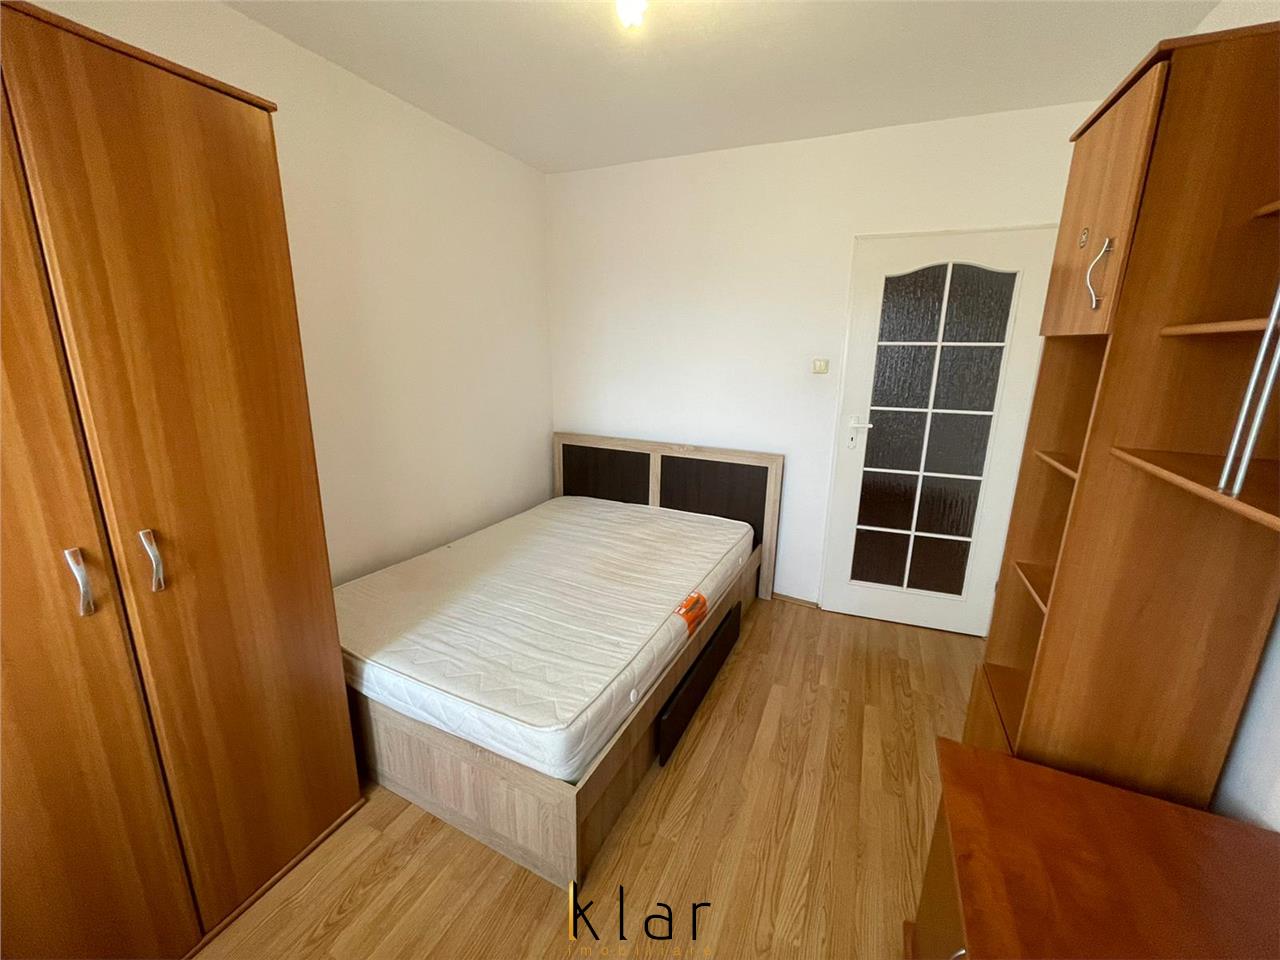 Apartament 3 camere, zona Aurel Vlaicu